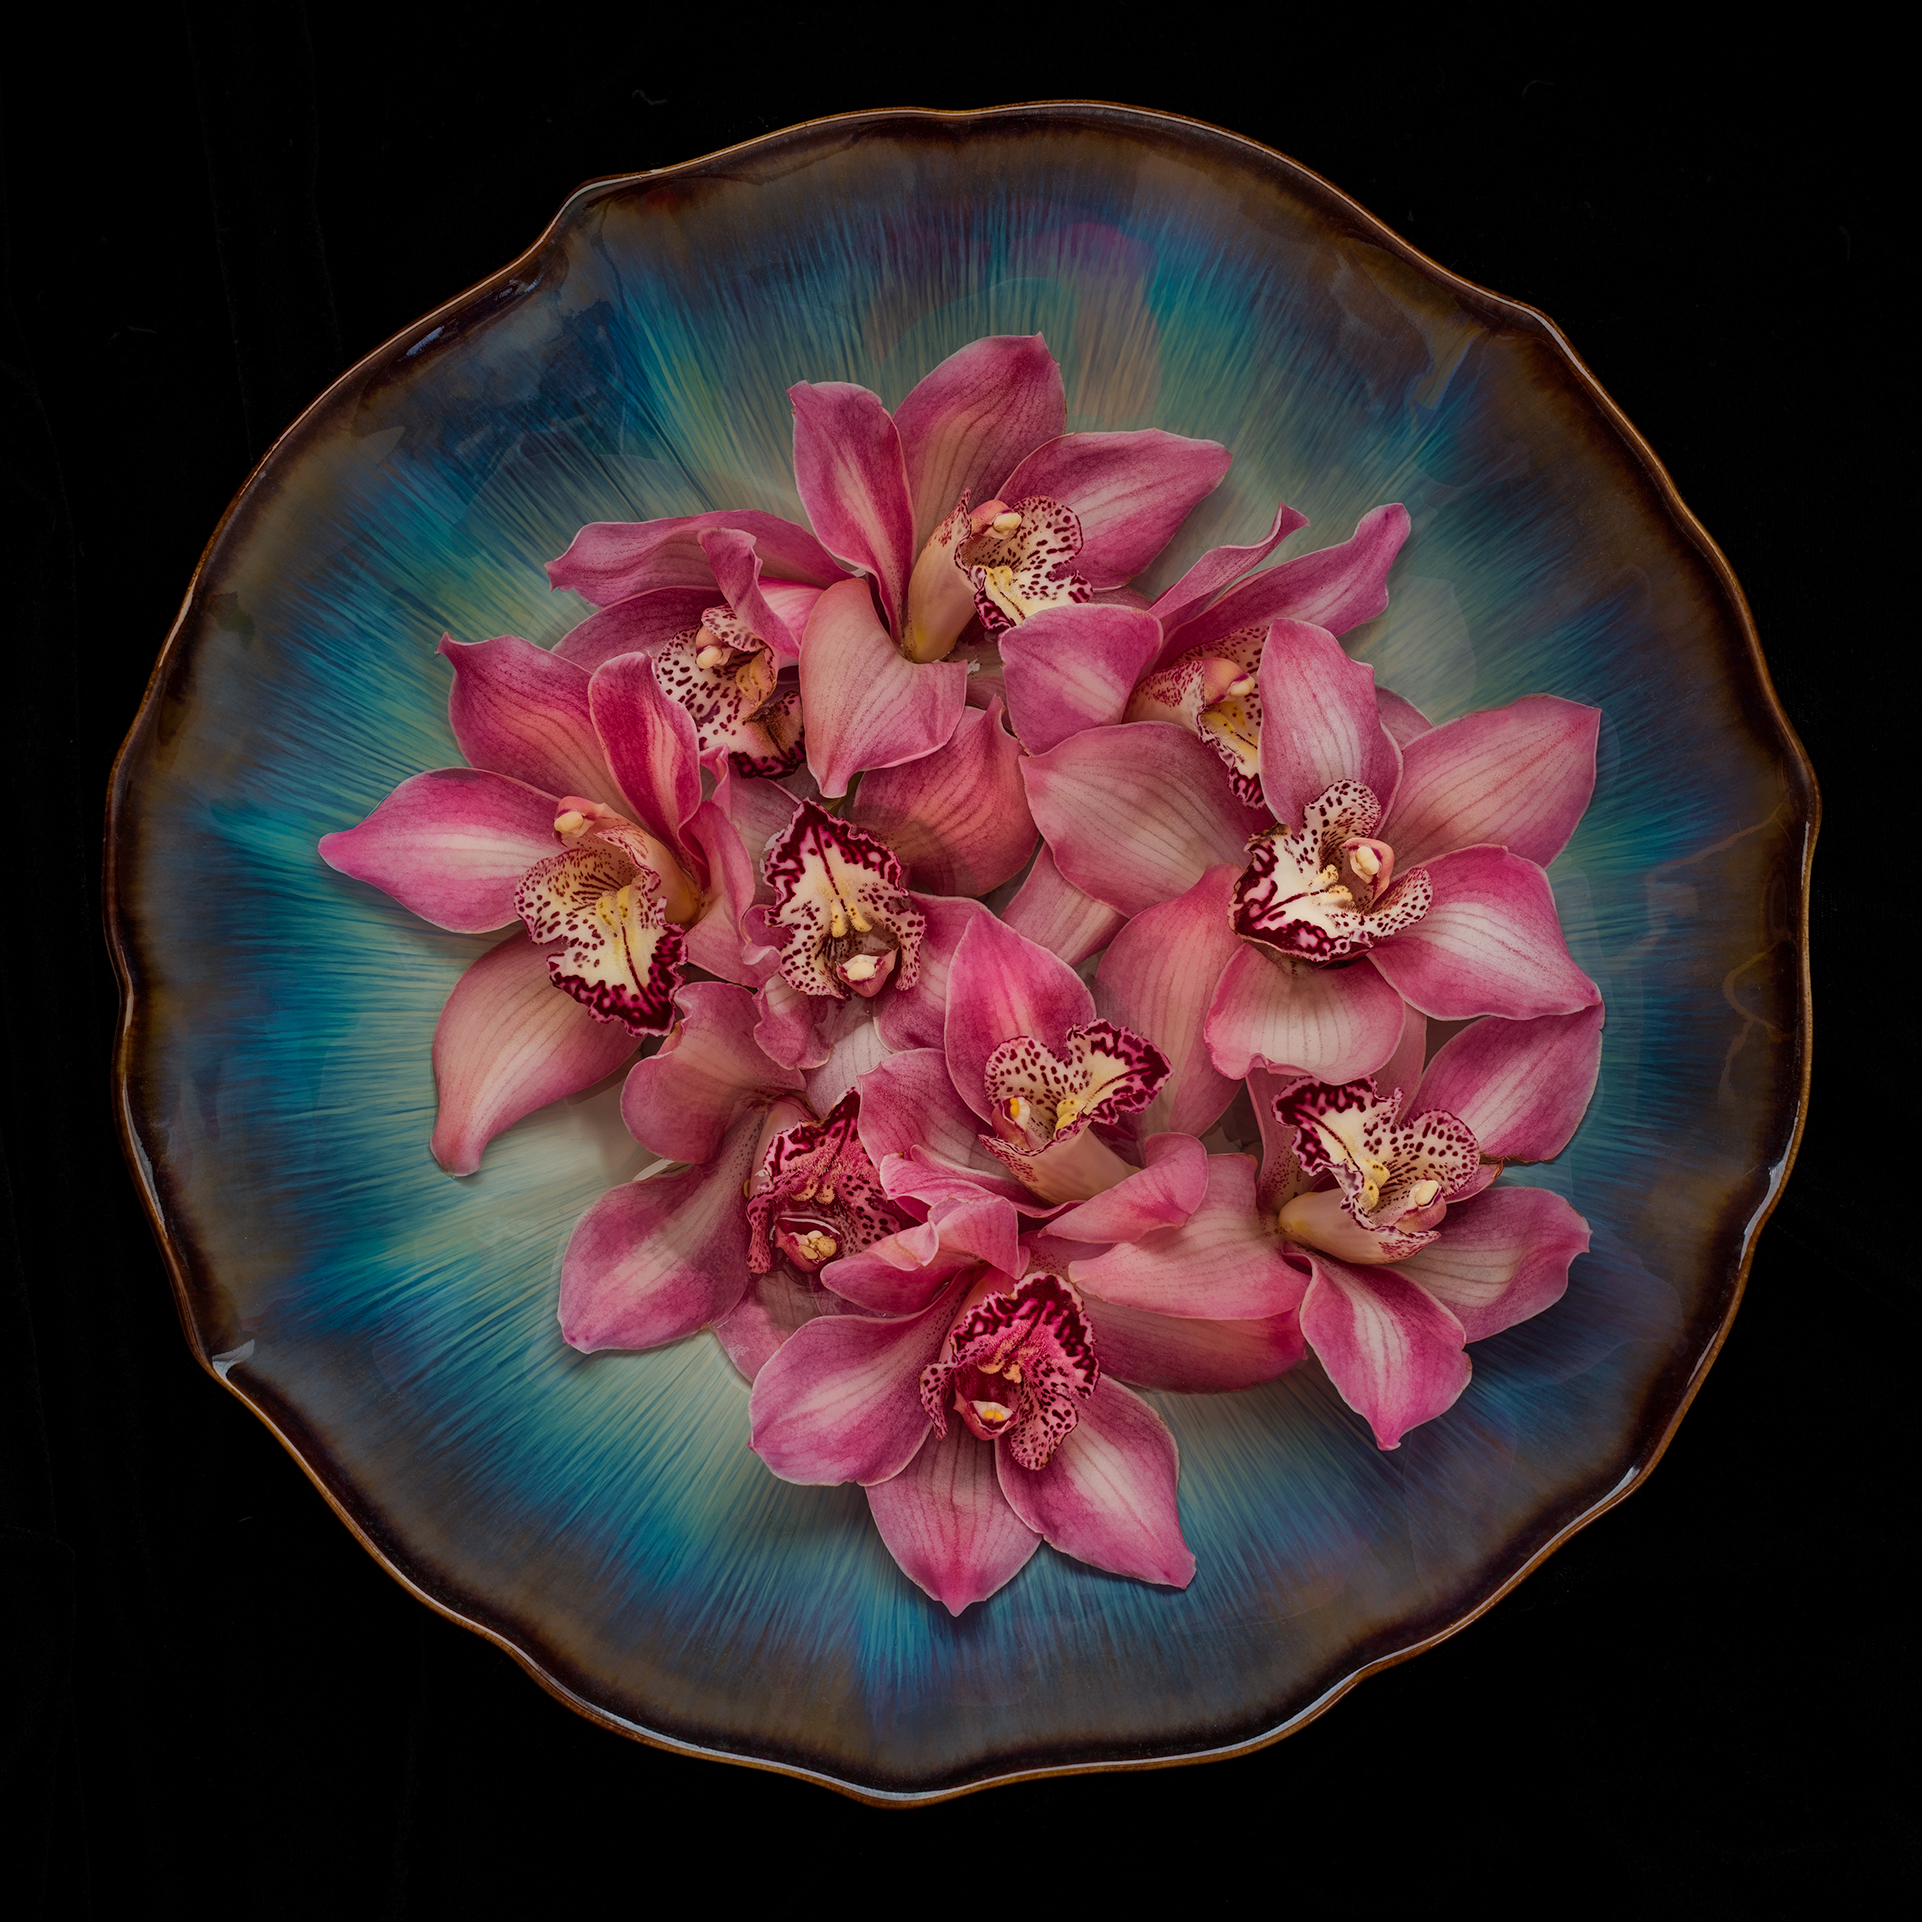 Orchids in a Blue Bowl © Harold Davis